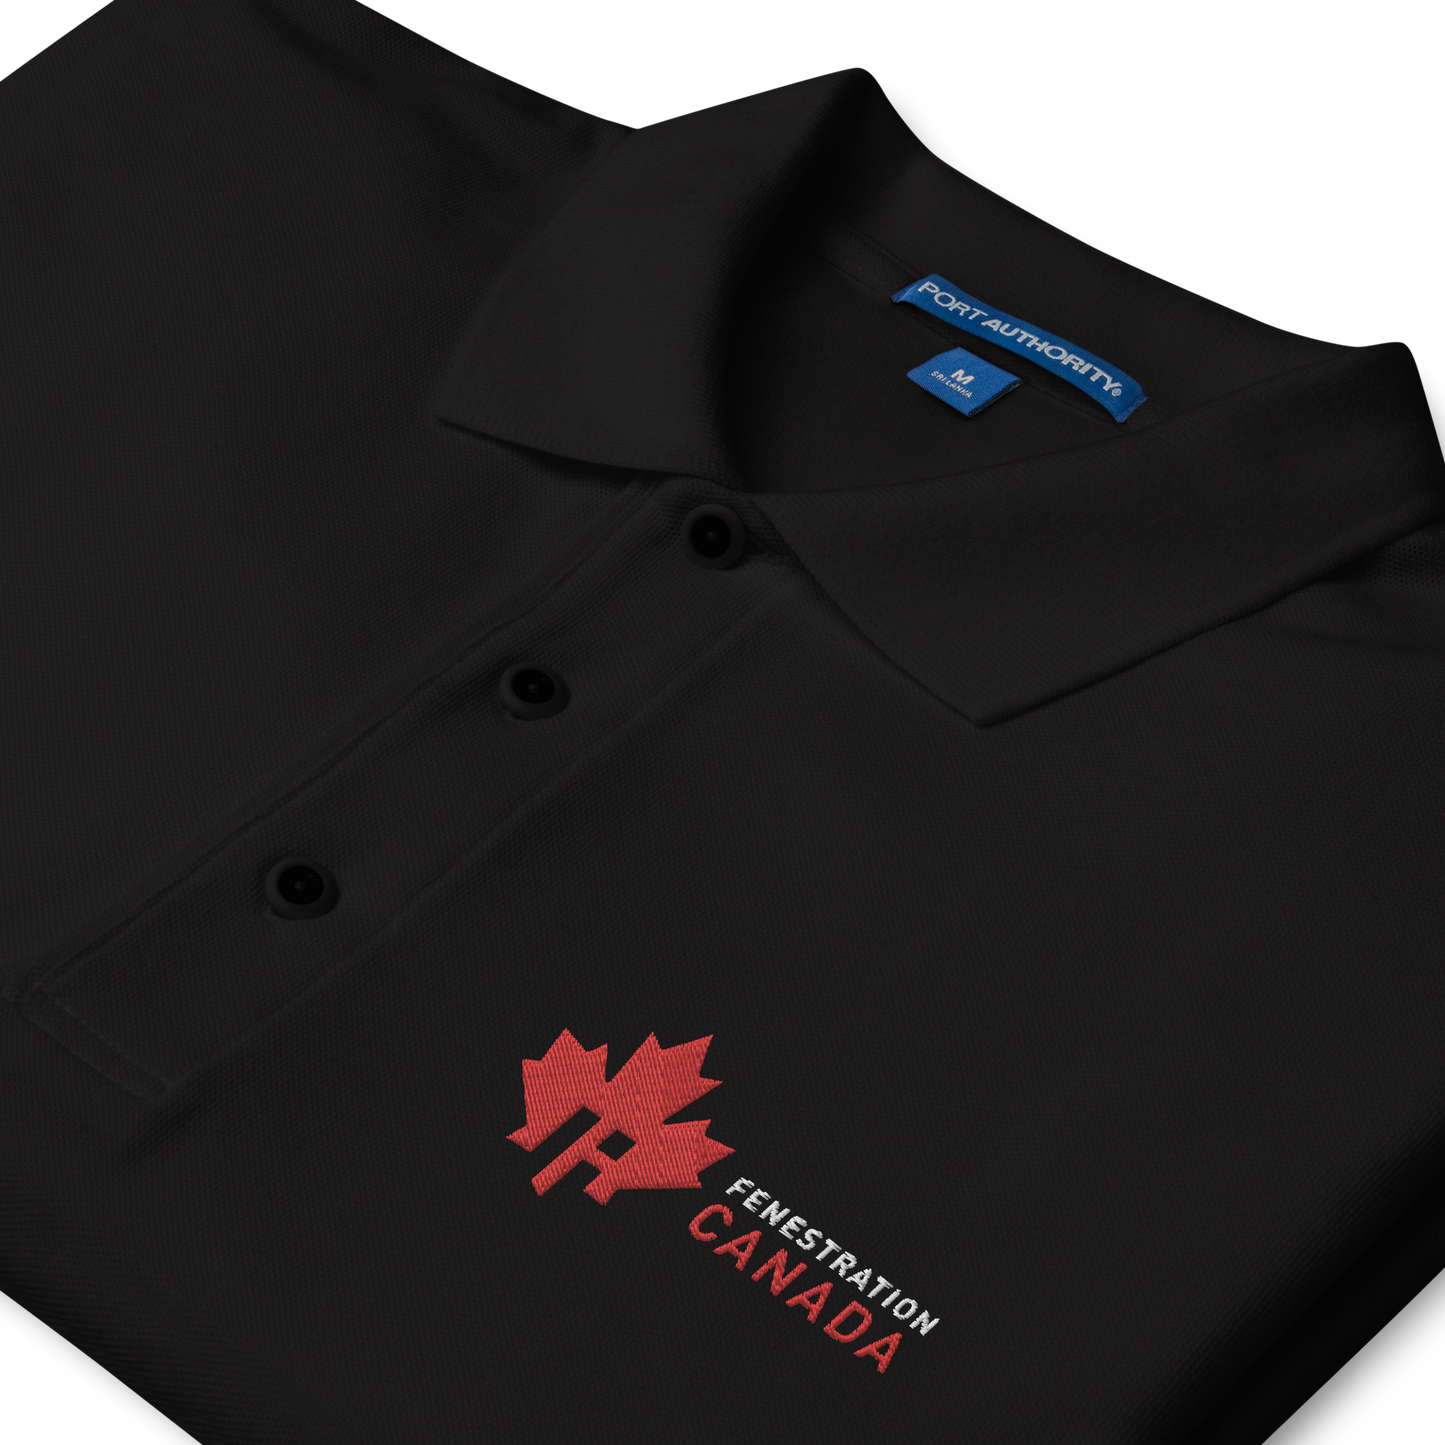 FenCan Premium Polo Shirt - Port Authority K500